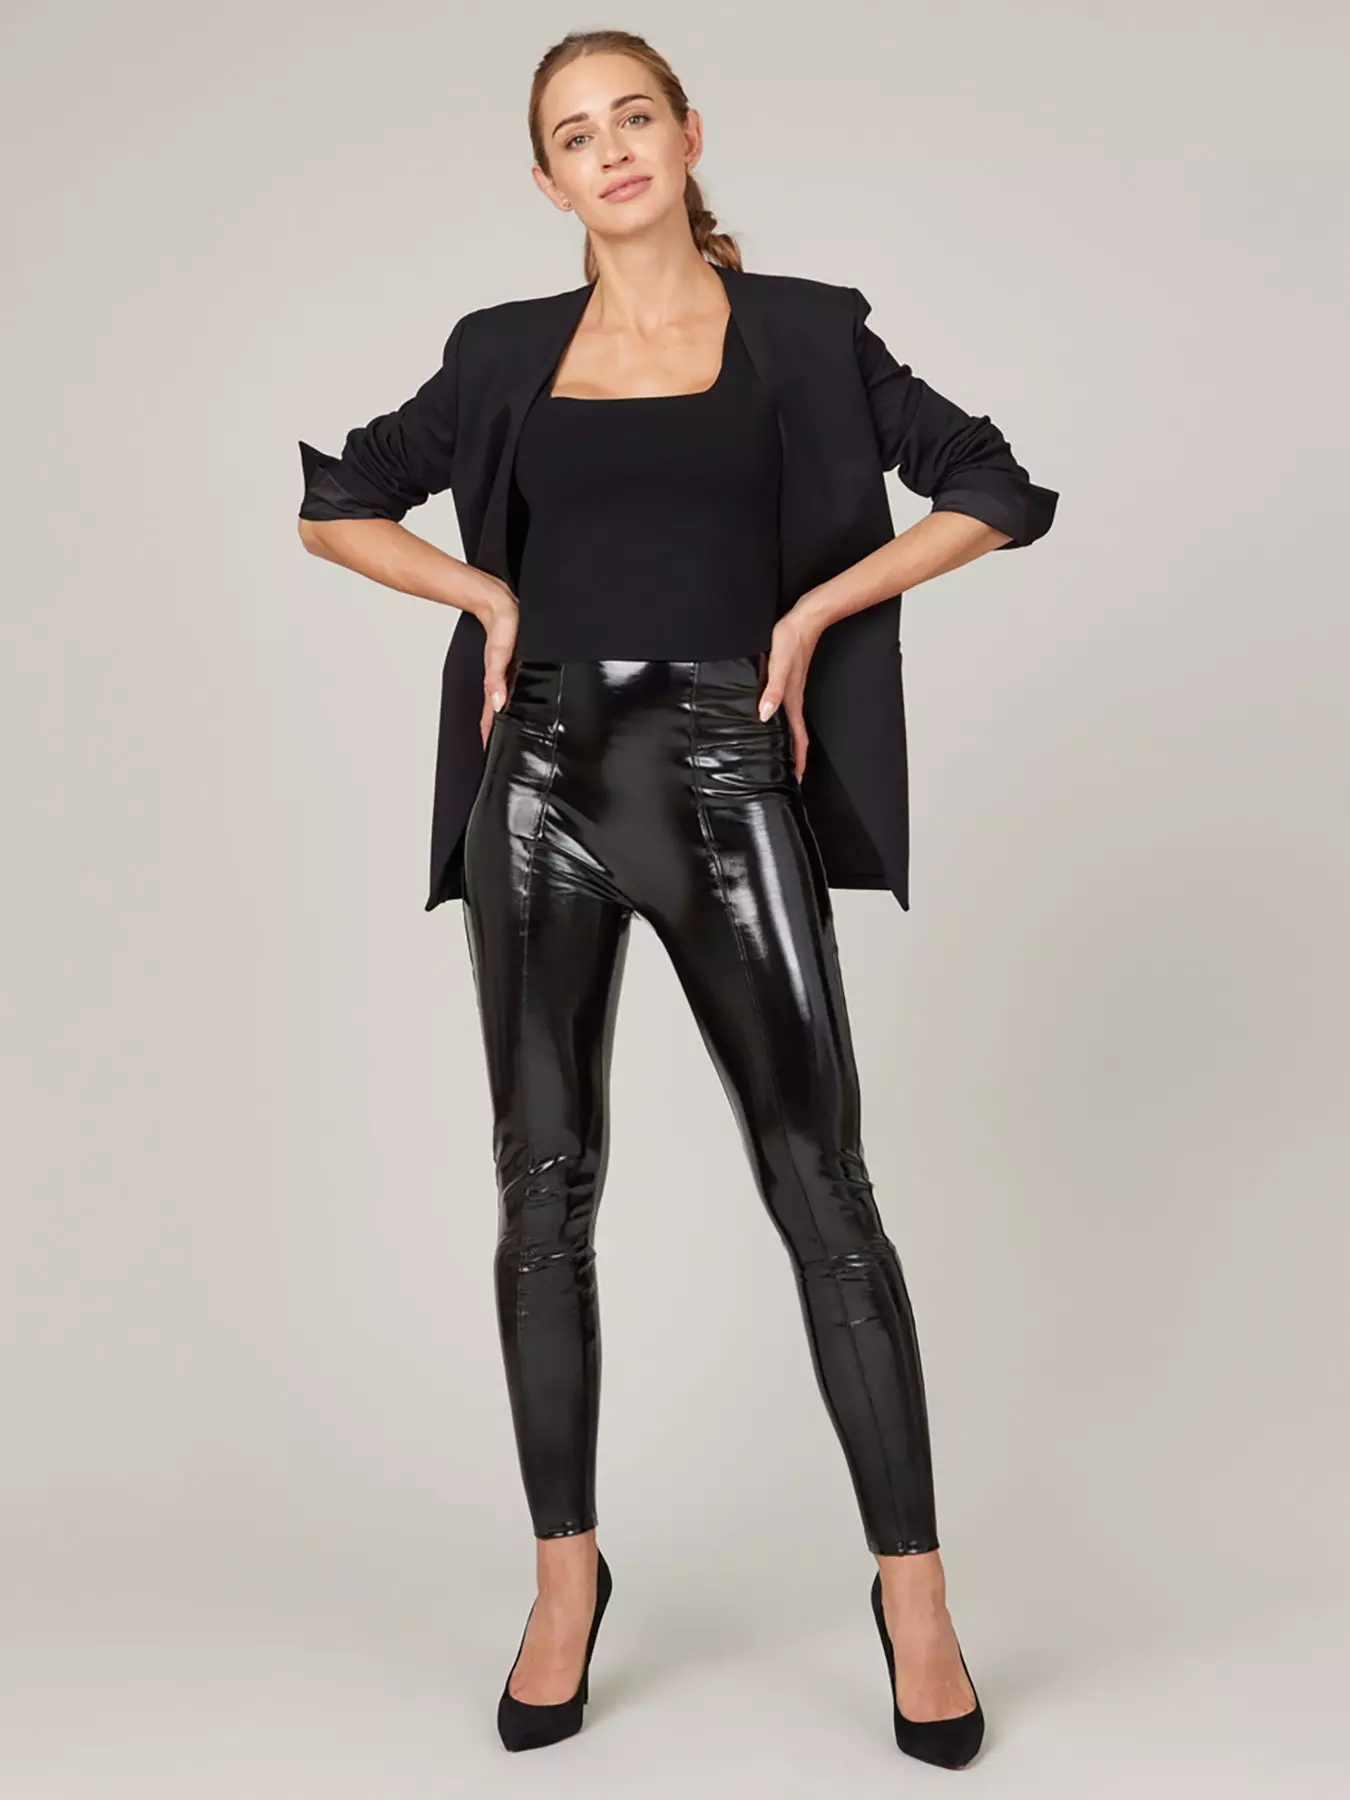 https://media.very.co.uk/i/very/VI24M_SQ1_0000000004_BLACK_MDf/spanx-faux-patent-leather-leggings.jpg?$180x240_retinamobilex2$&fmt=webp